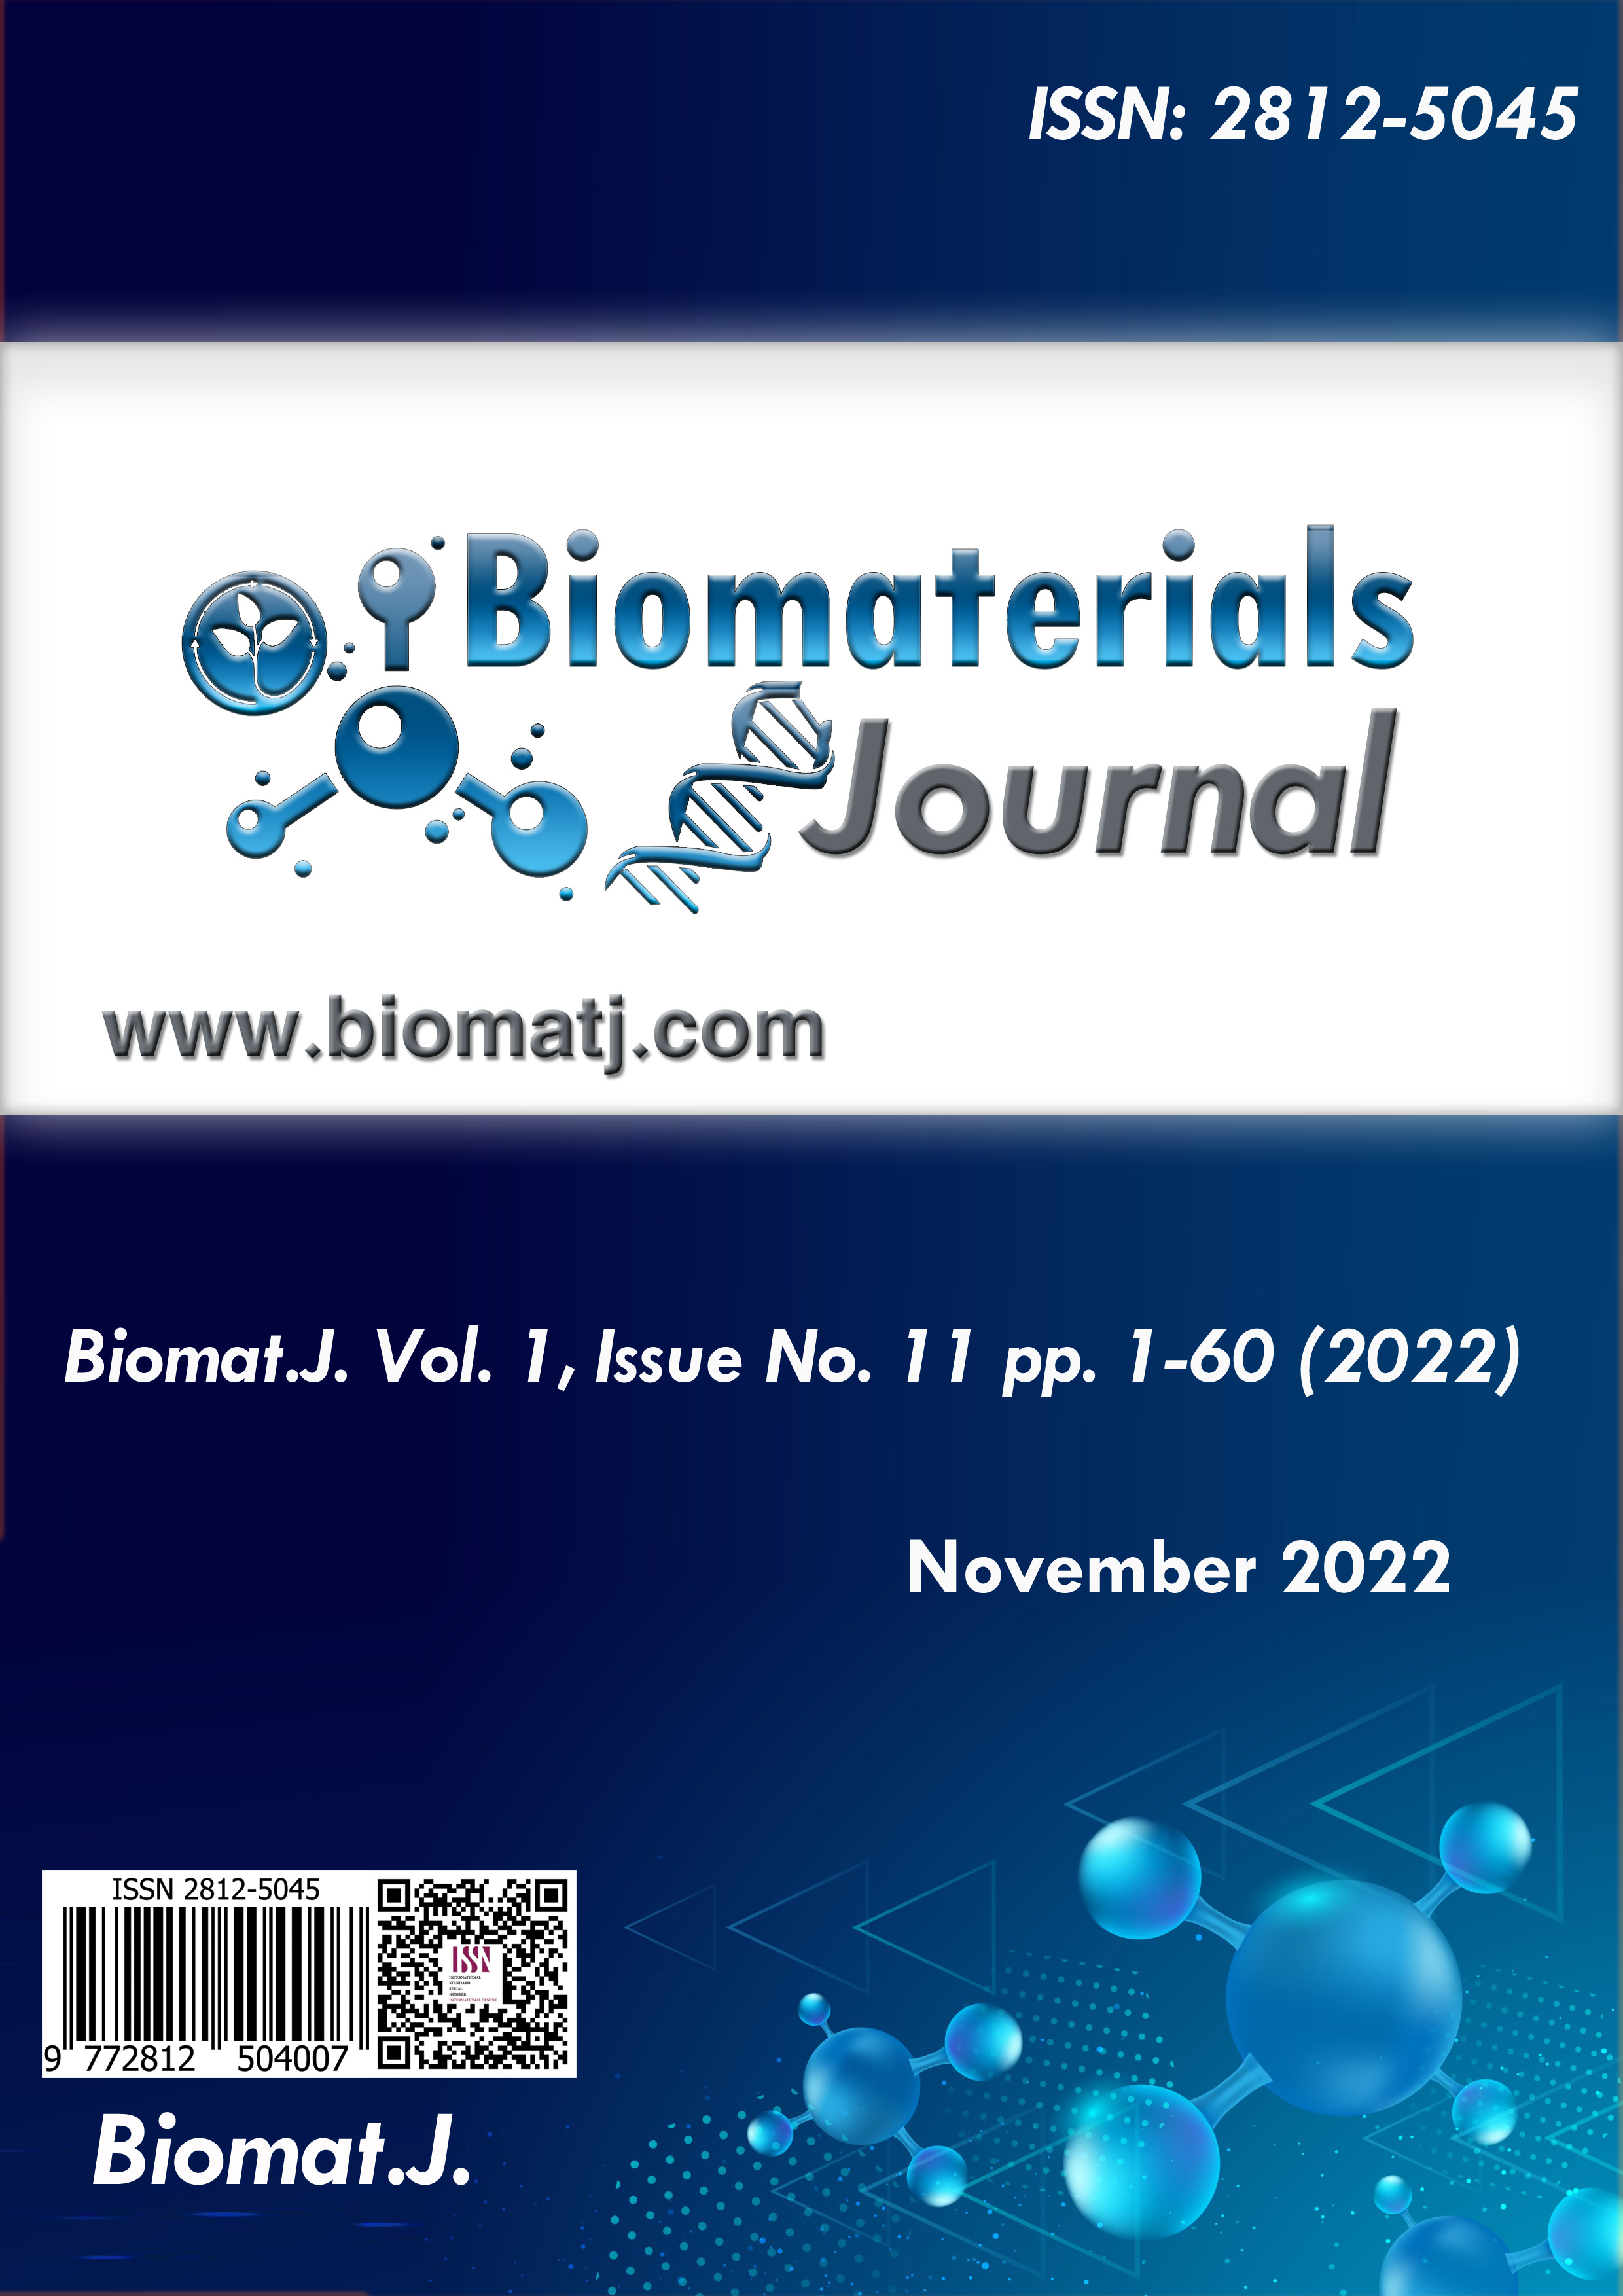 Biomaterials Journal Volume 1, Issue No. 11, November 2022